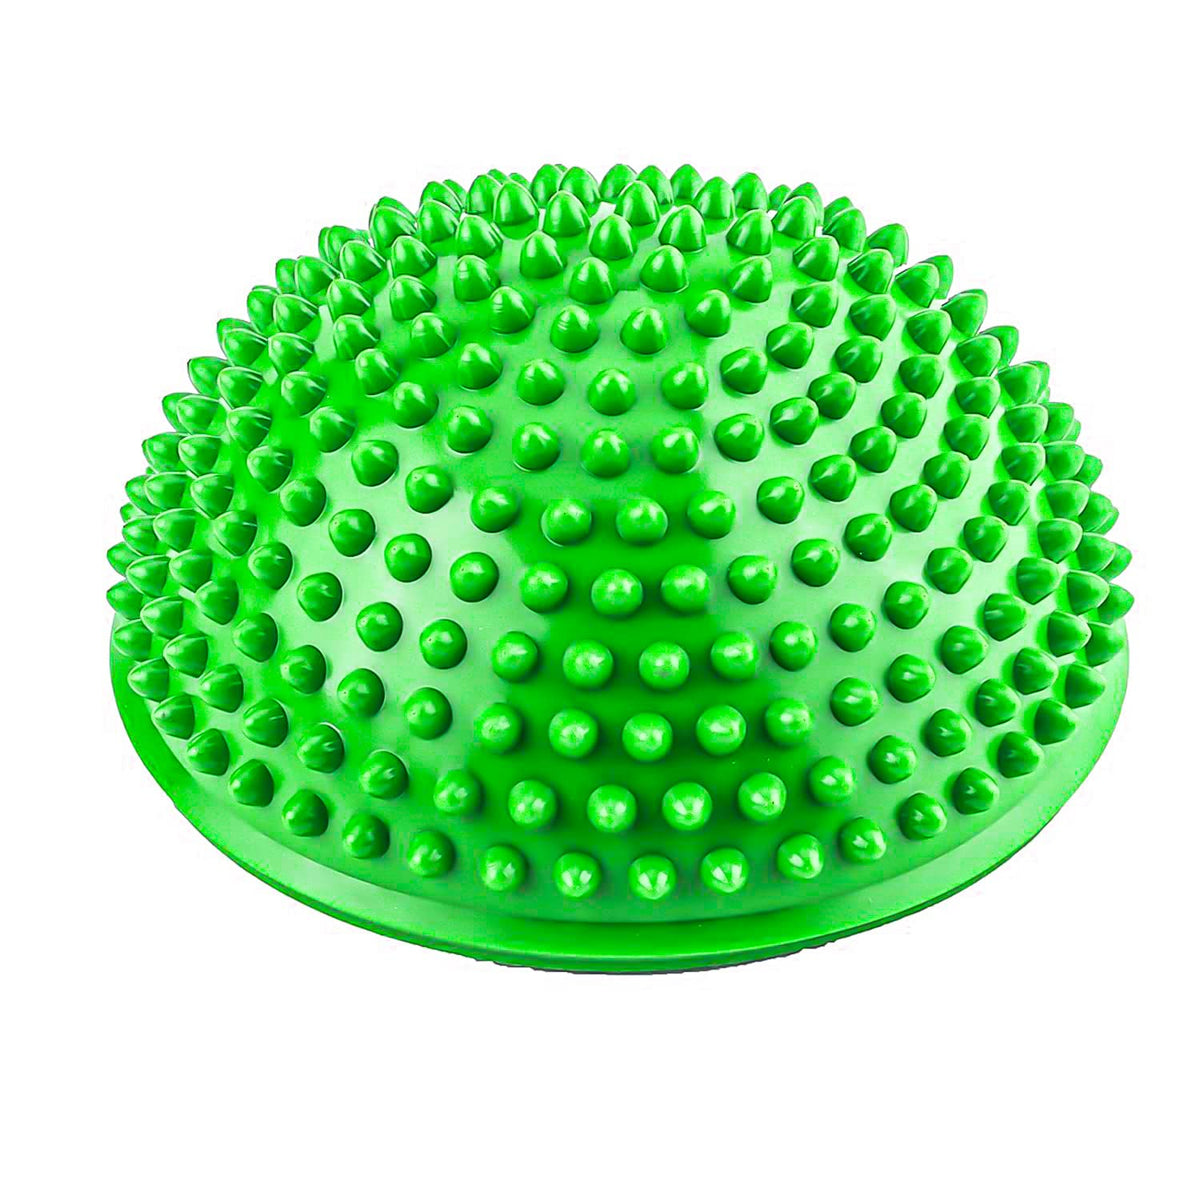 Strauss Hedgehog Balance Pod, (Green)